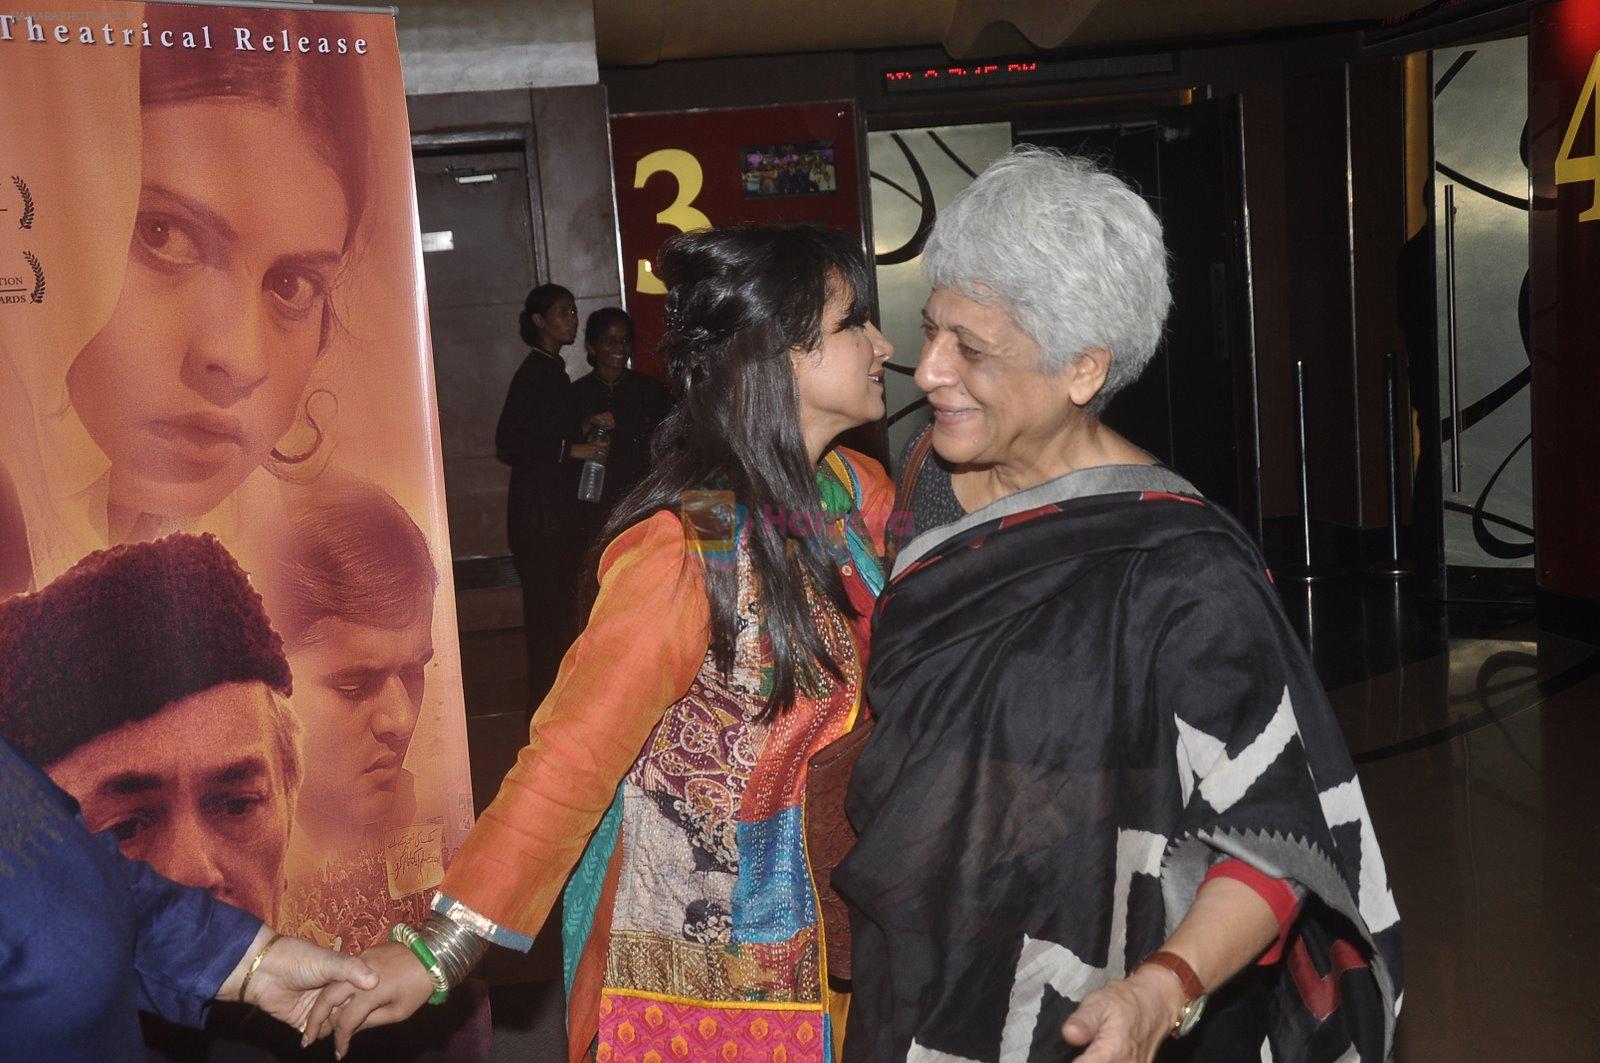 Divya Dutta at the screening of Garm Hava in Pvr on 11th Nov 2014